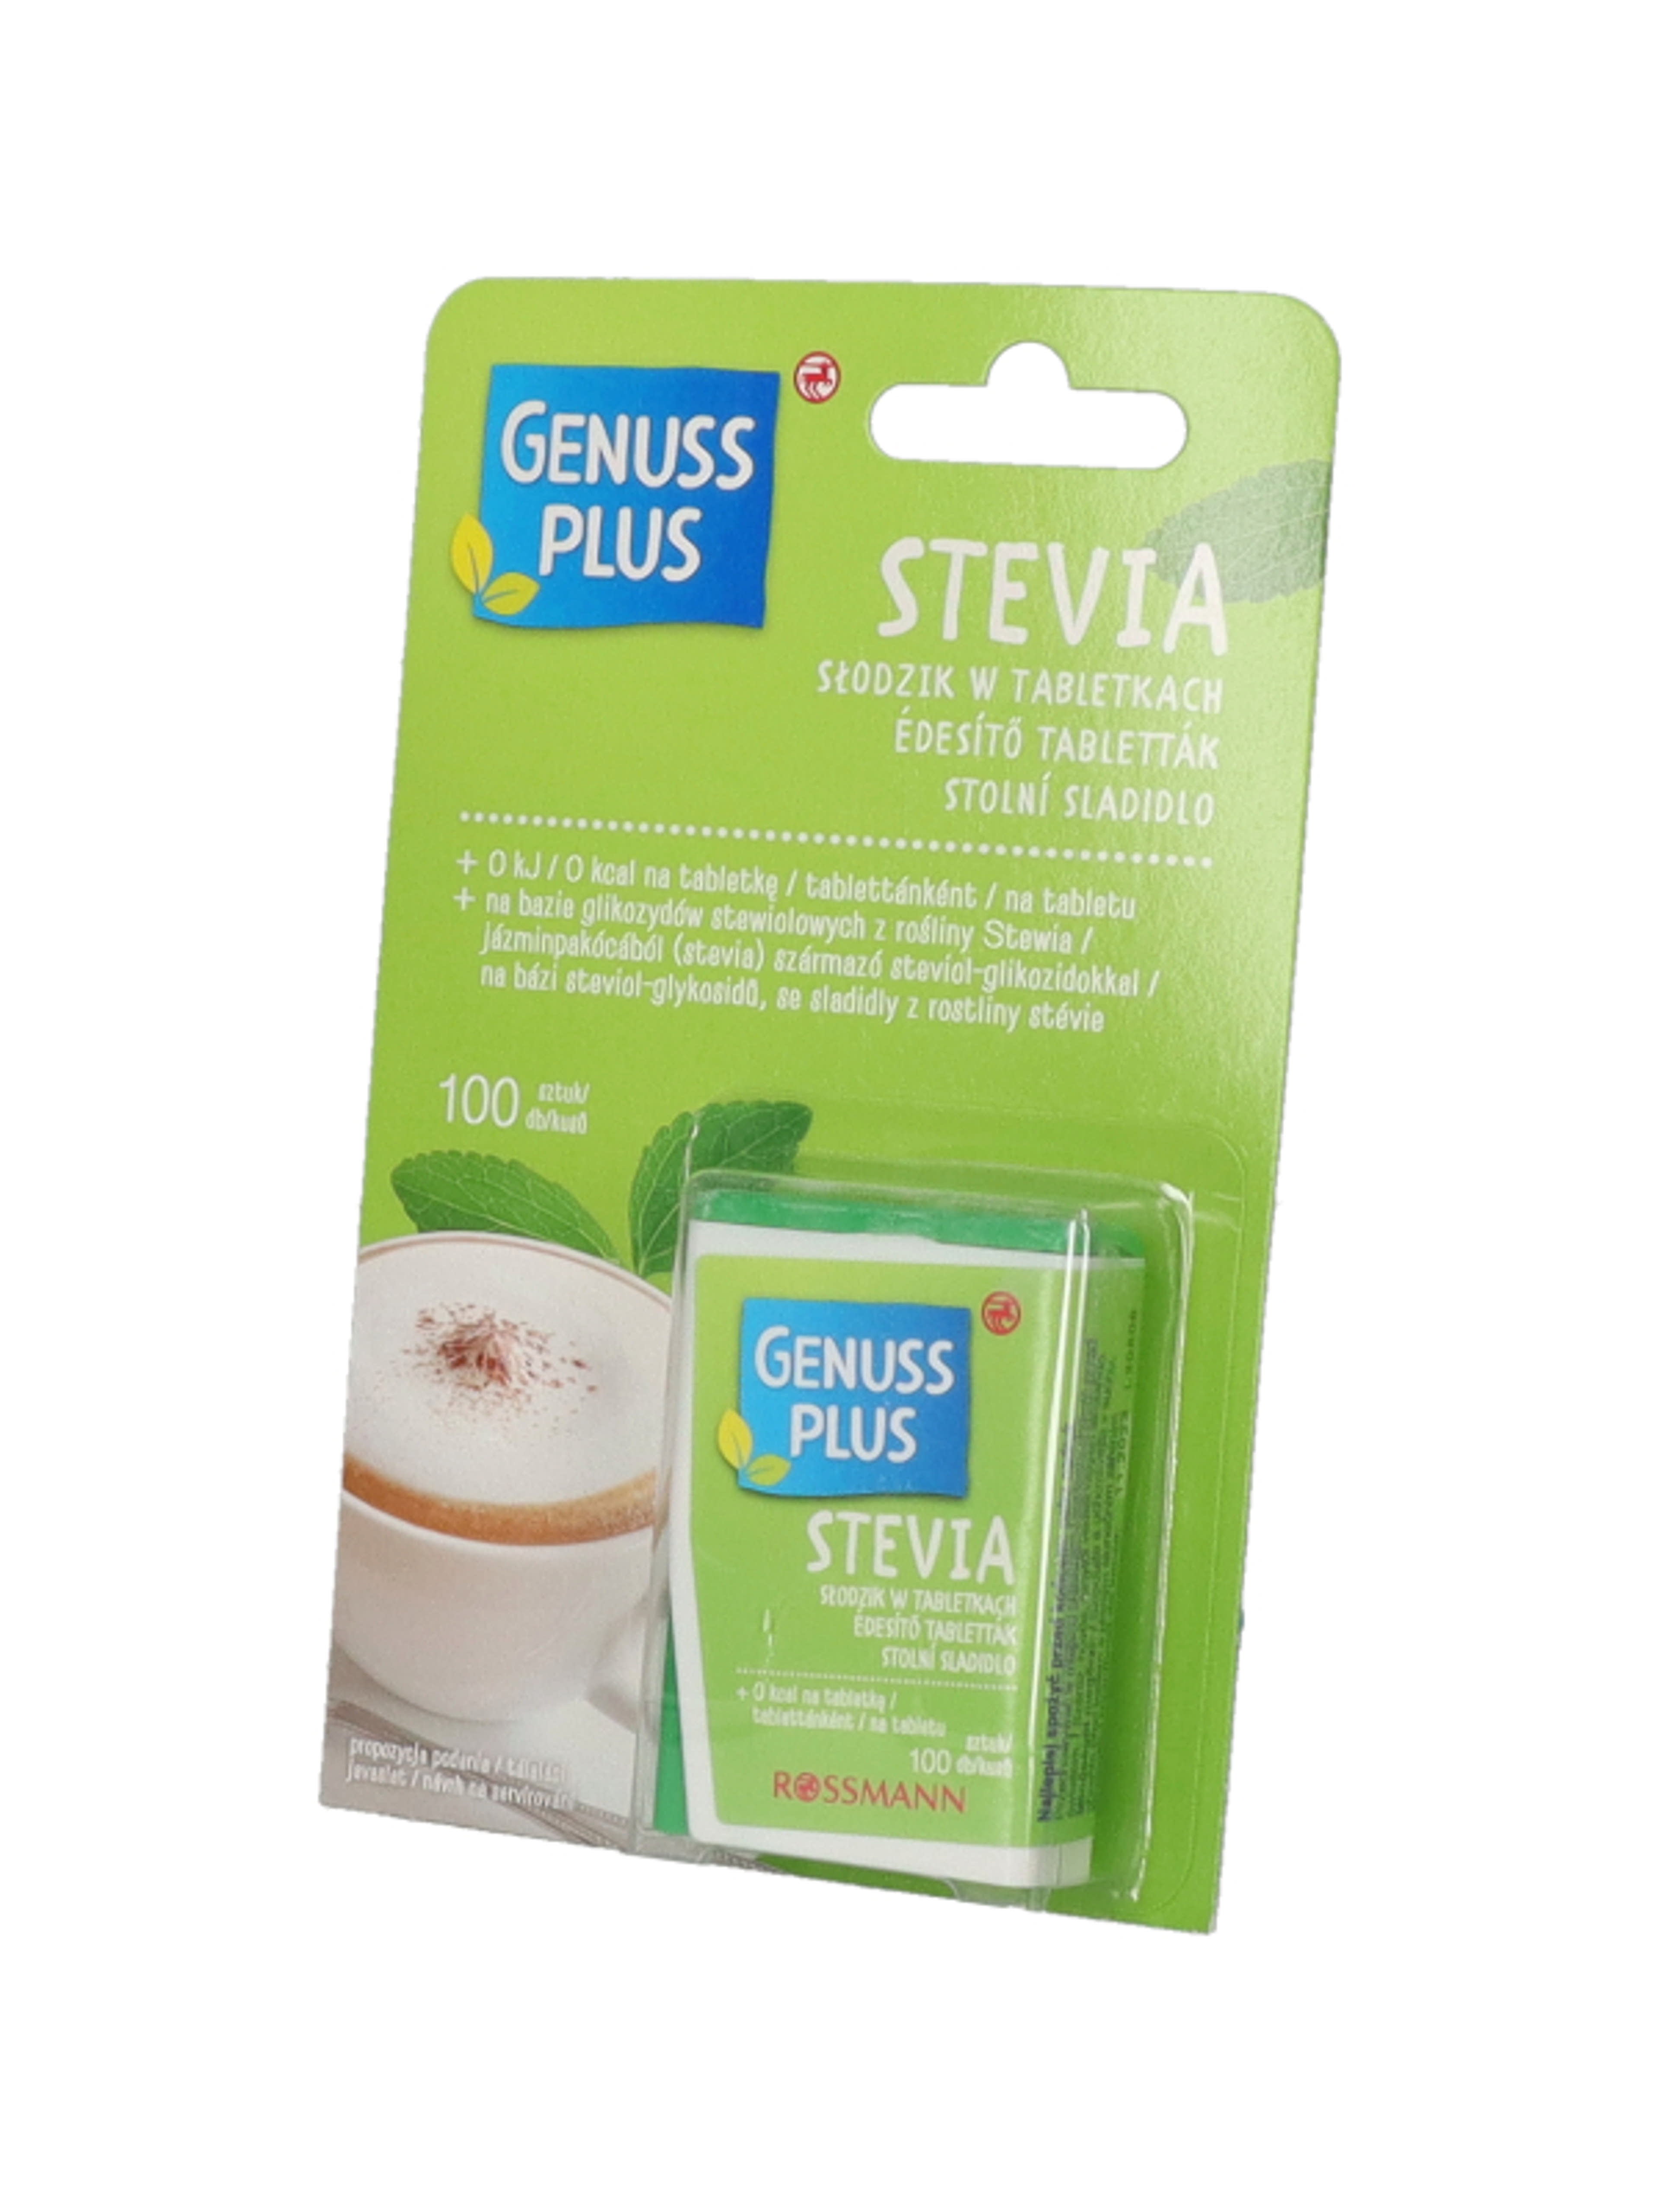 Genuss plus stevia édesítő tabletta - 100 db-5